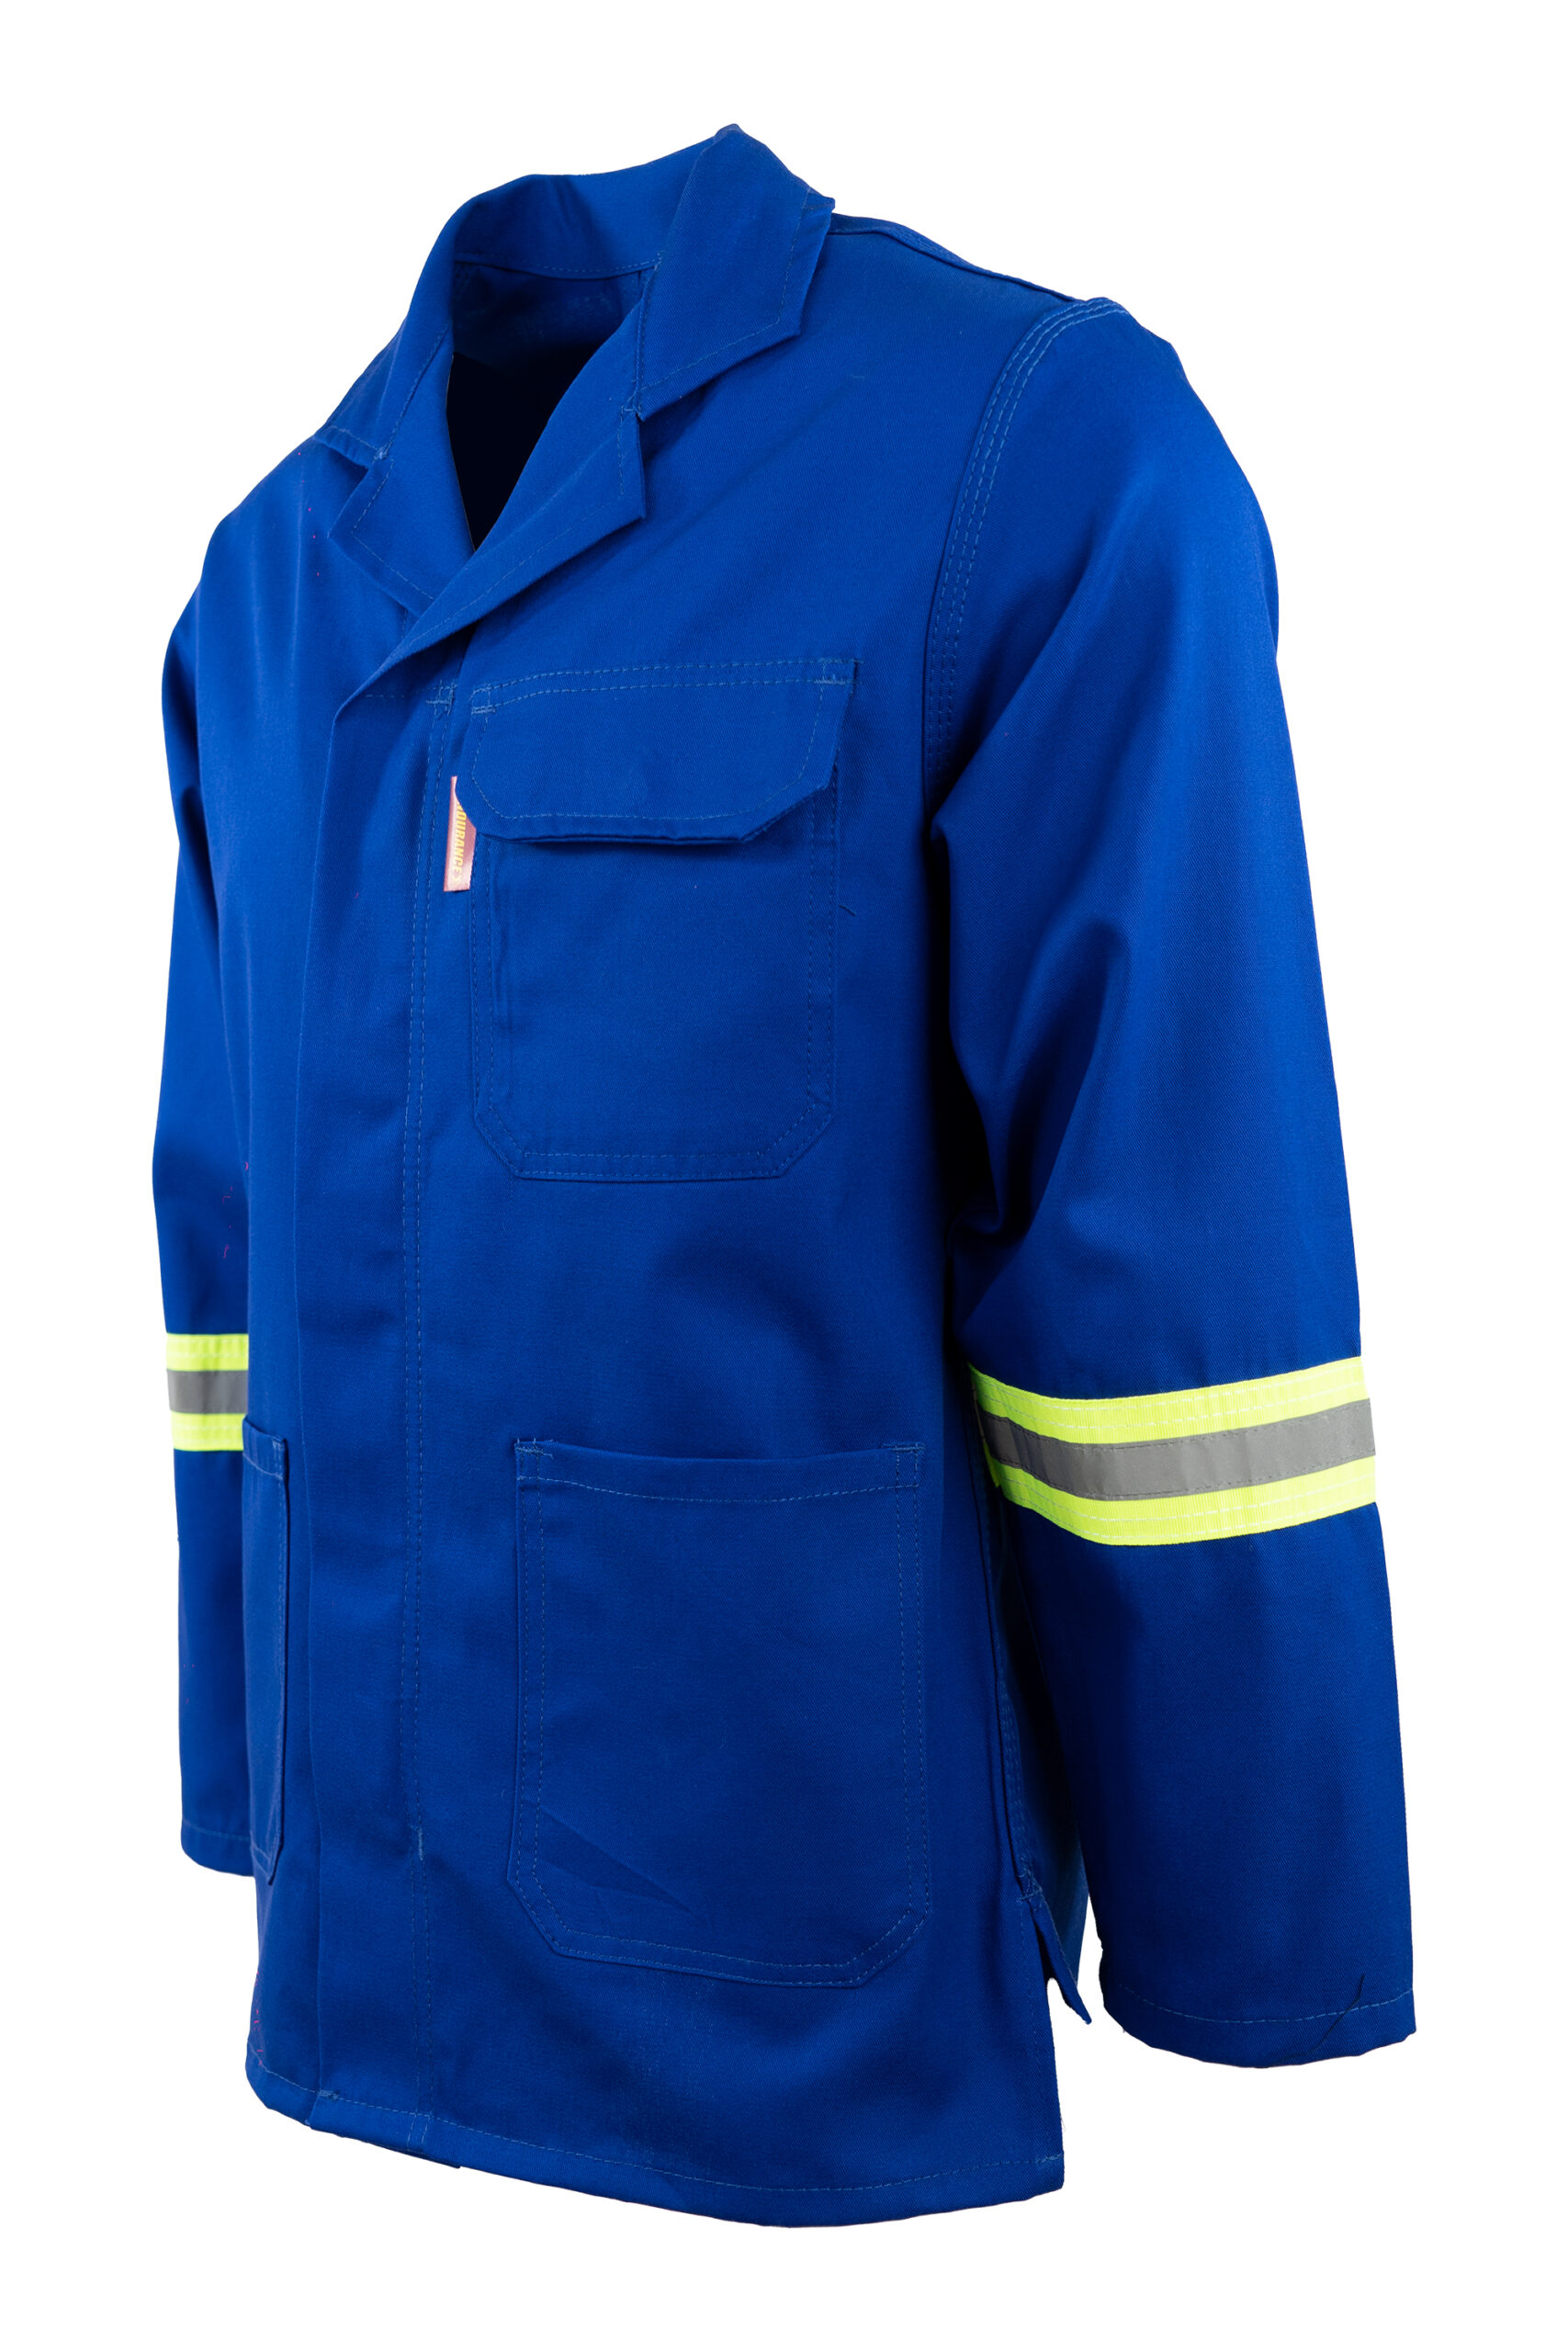 J54 100% Cotton Royal Blue Conti Jacket - Endurance Workwear